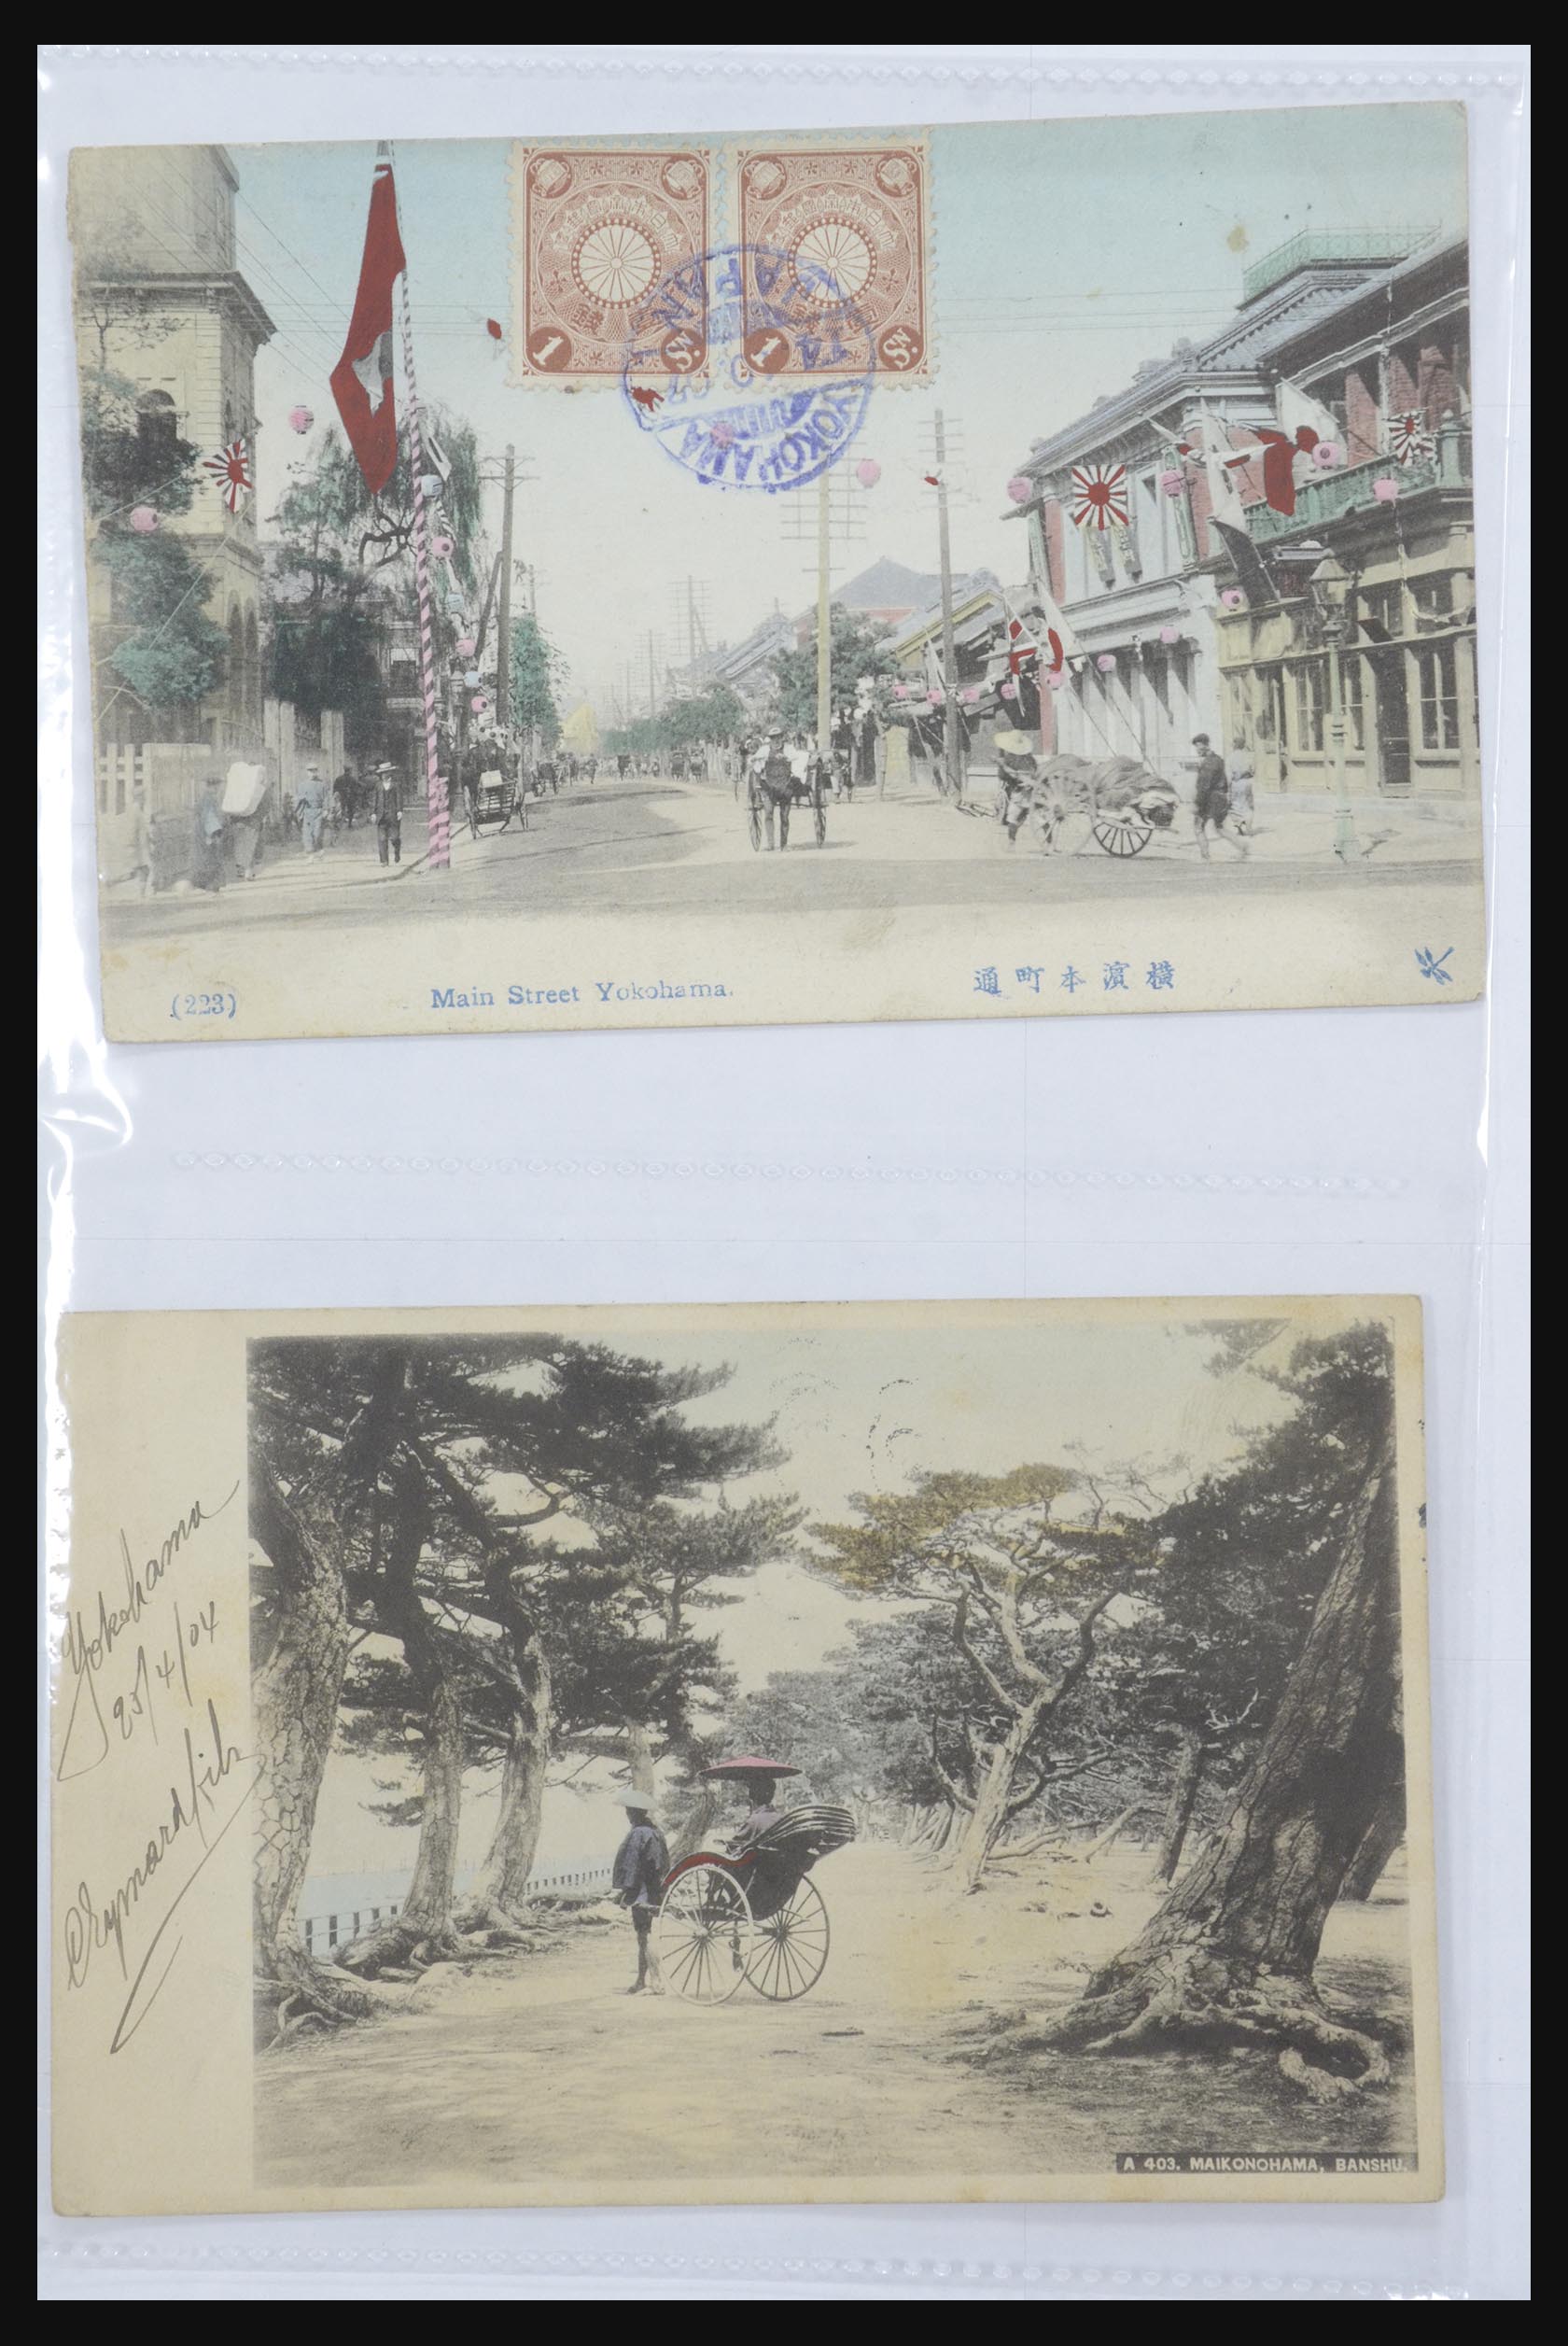 31667 019 - 31667 Japan picture postcards 1900-1920.